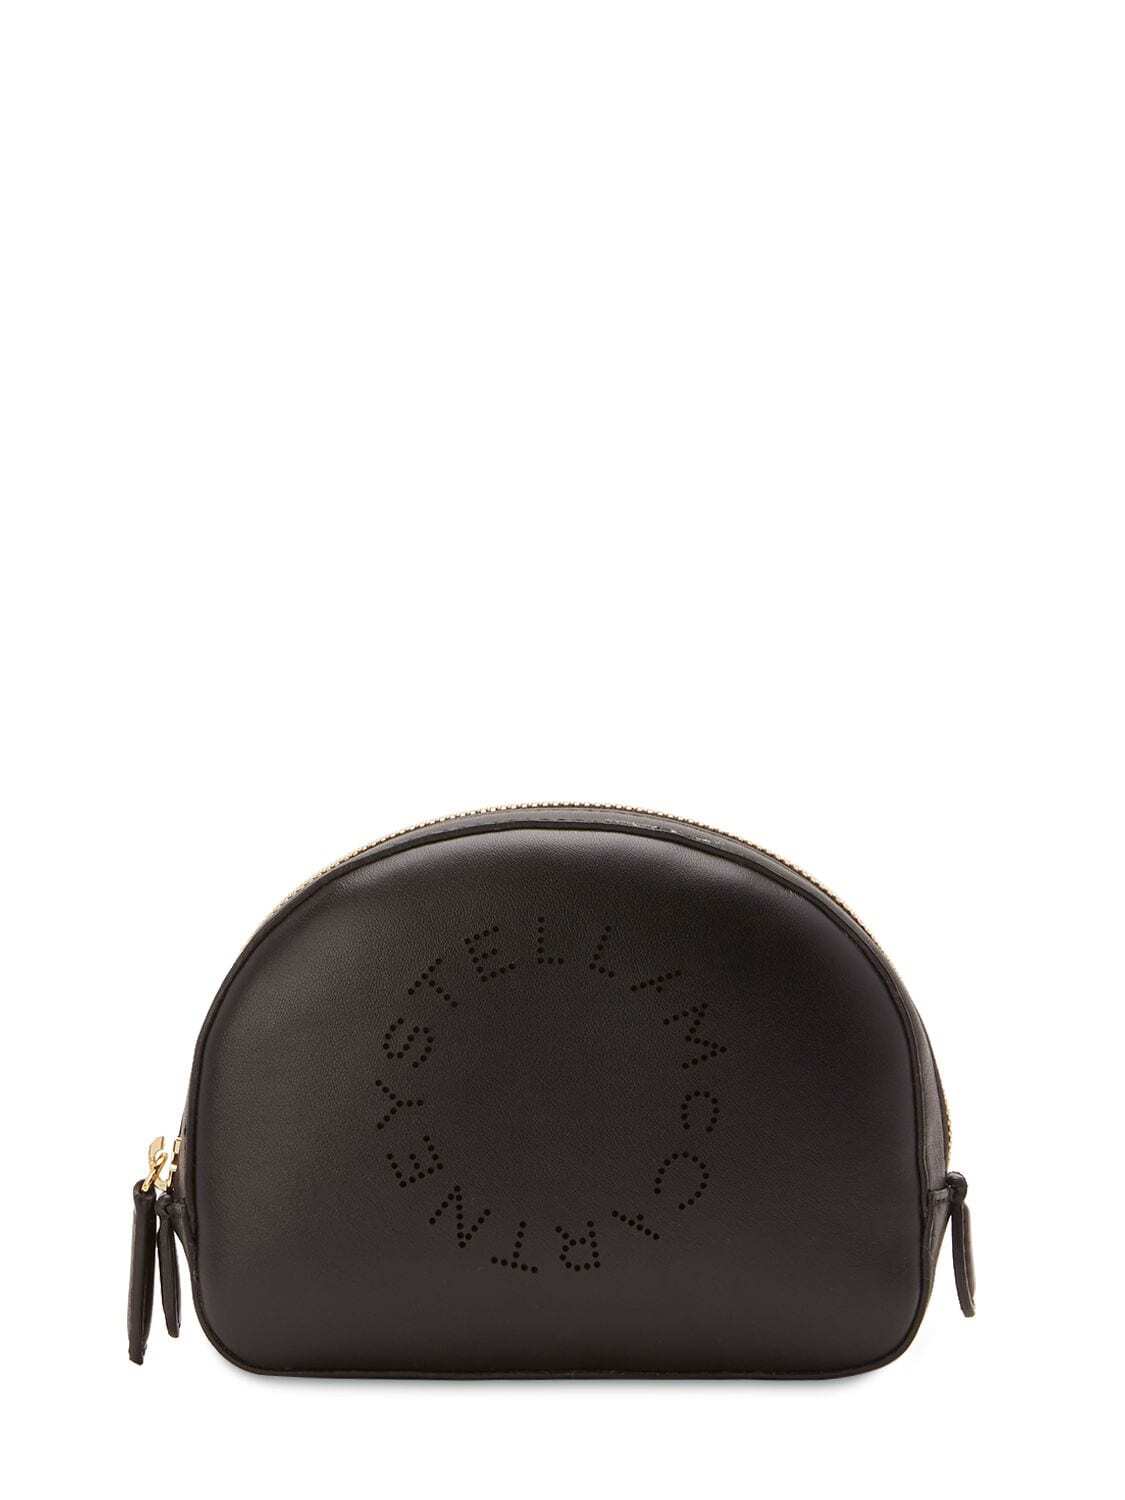 STELLA MCCARTNEY Logo Faux Leather Makeup Bag in black